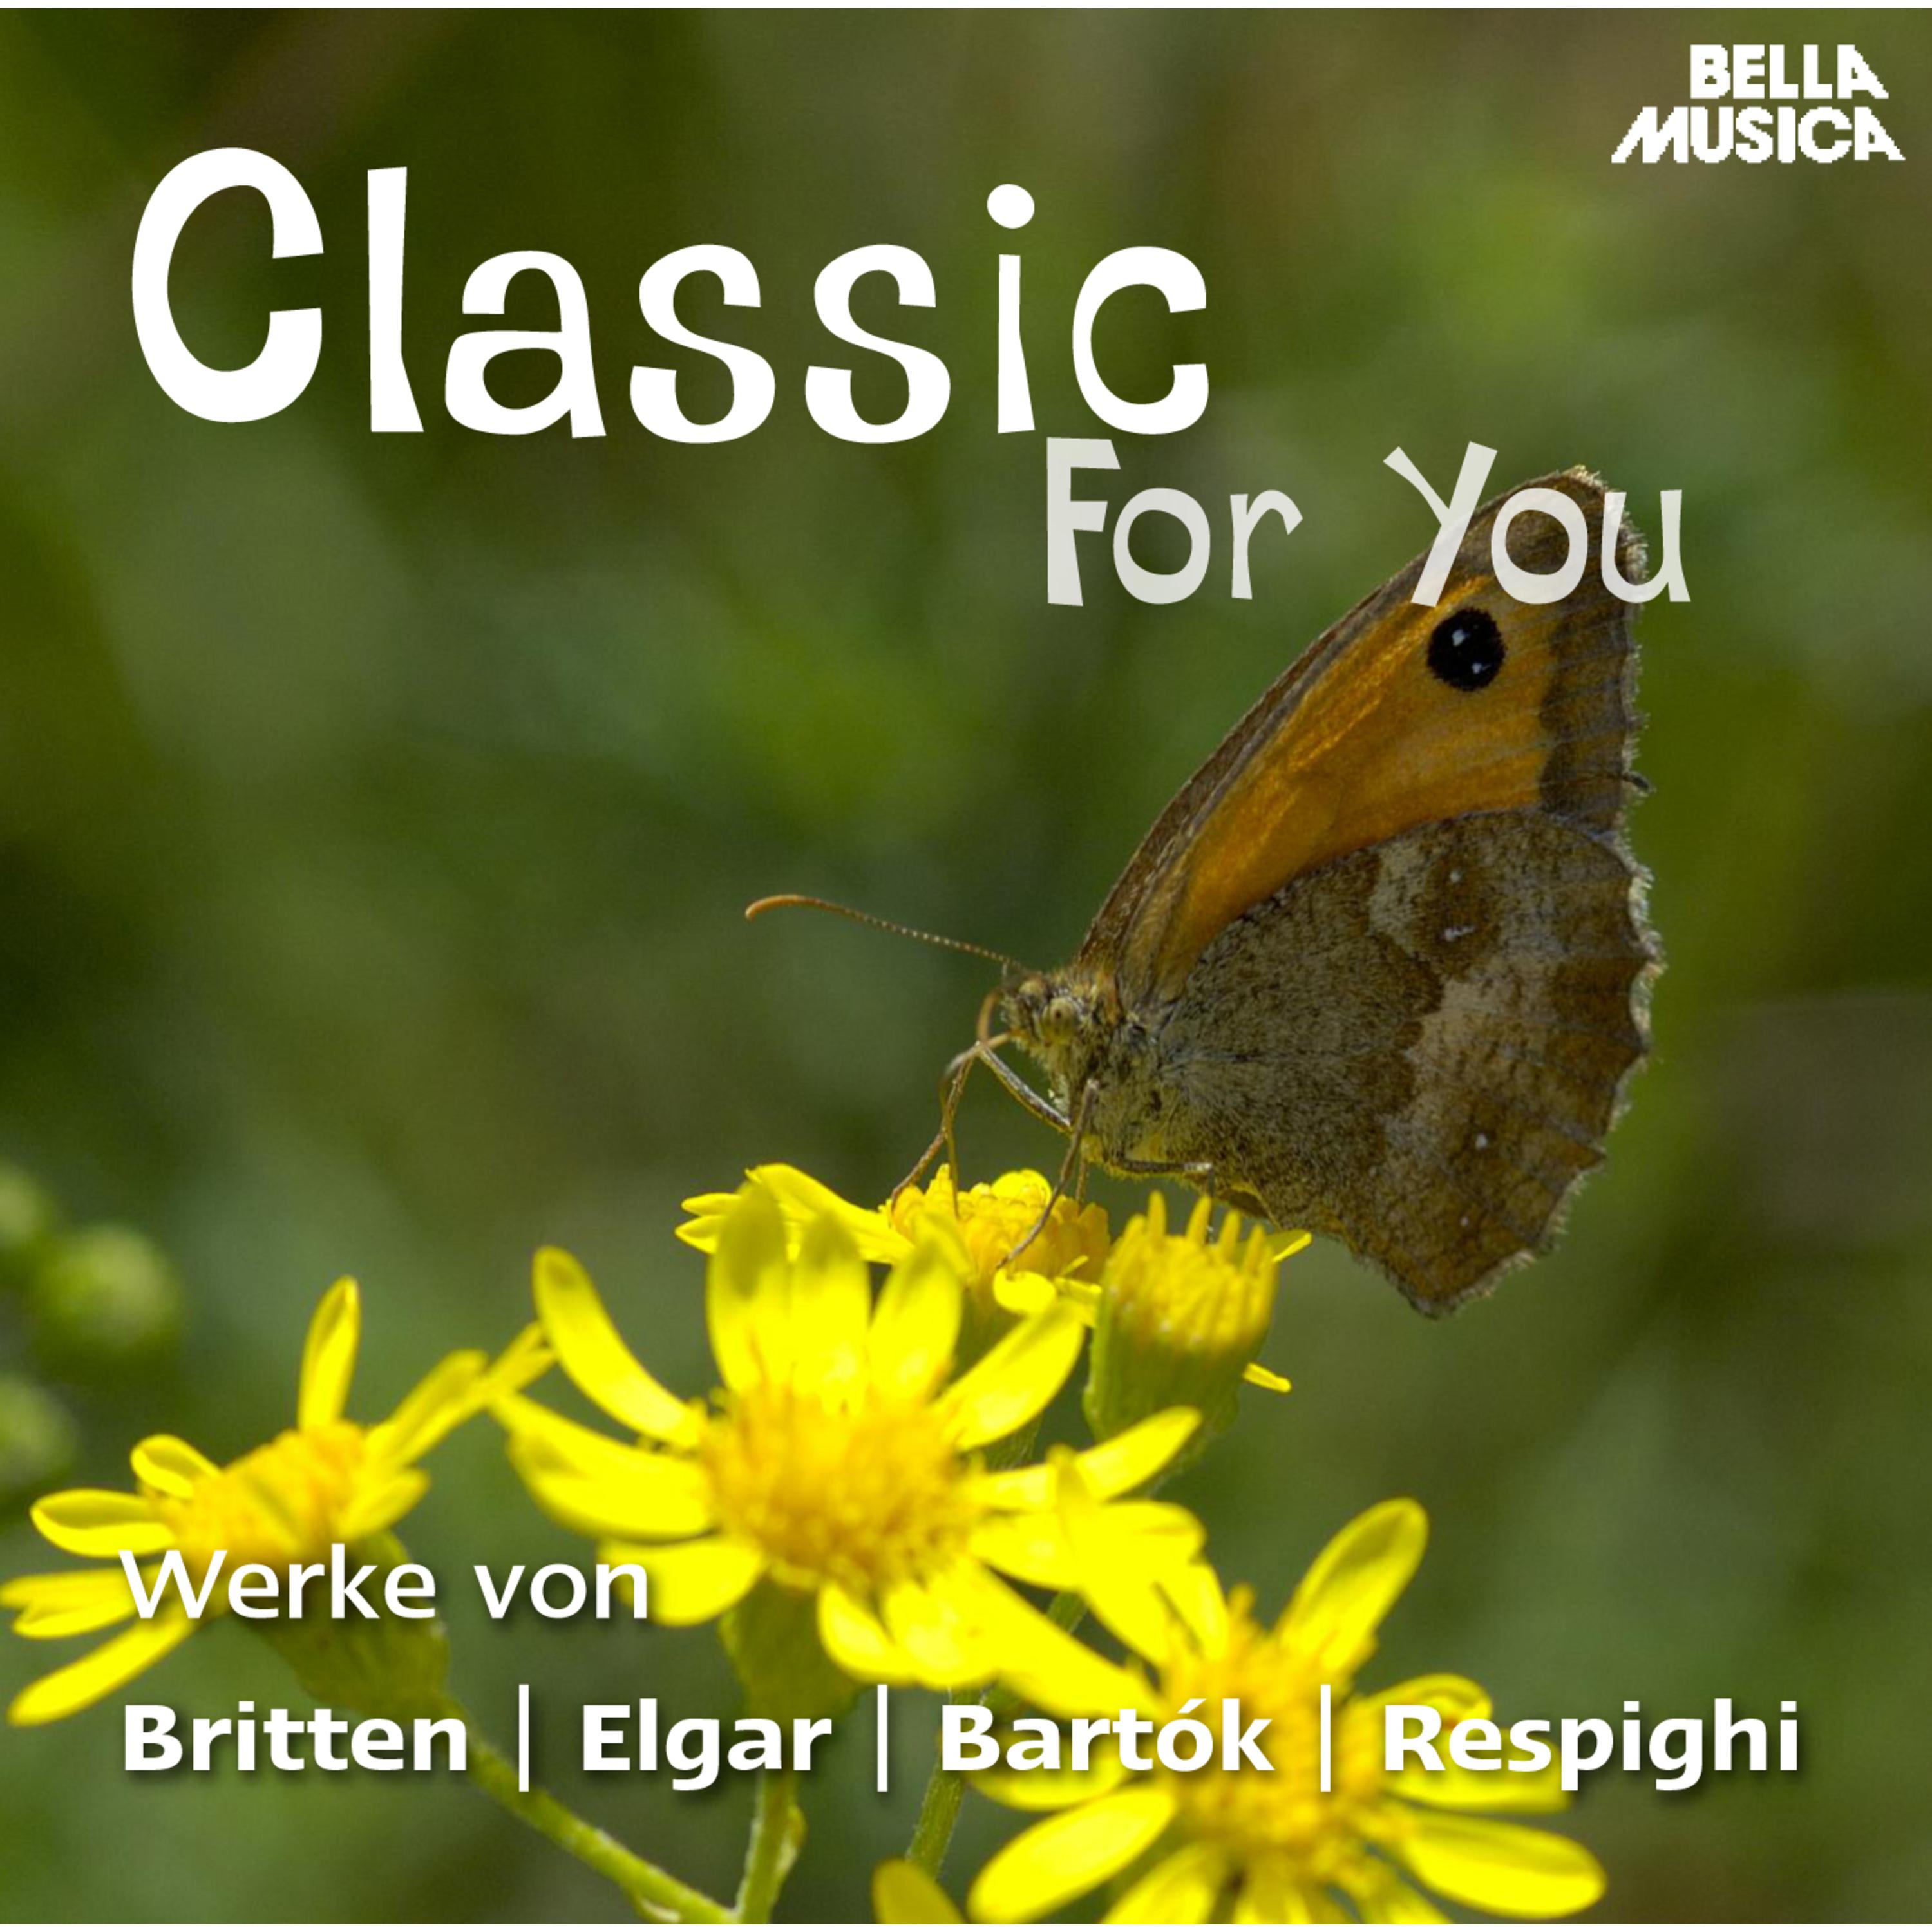 Classic for You: Werke von Britten - Elgar - Bartok - Respighi